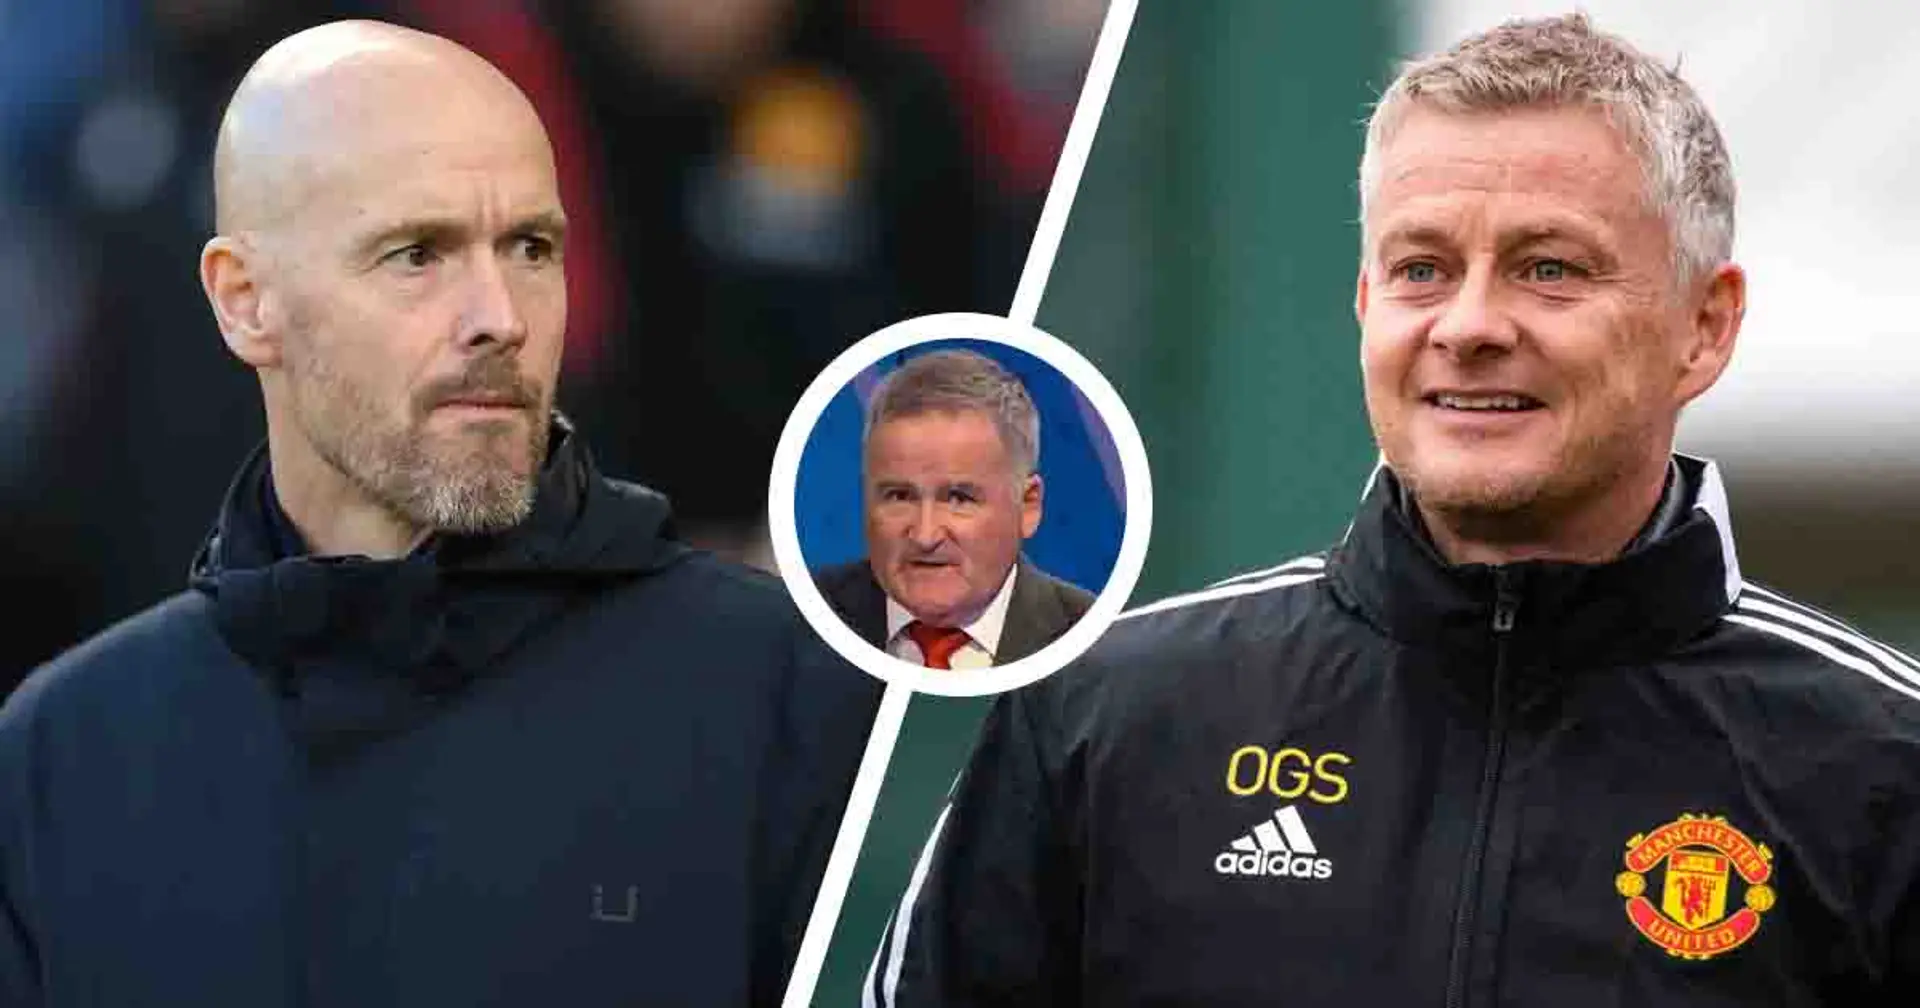 'I don't get the hysteria’: Richard Keys claims Ten Hag doing worse job at Man United than Solskjaer and Van Gaal